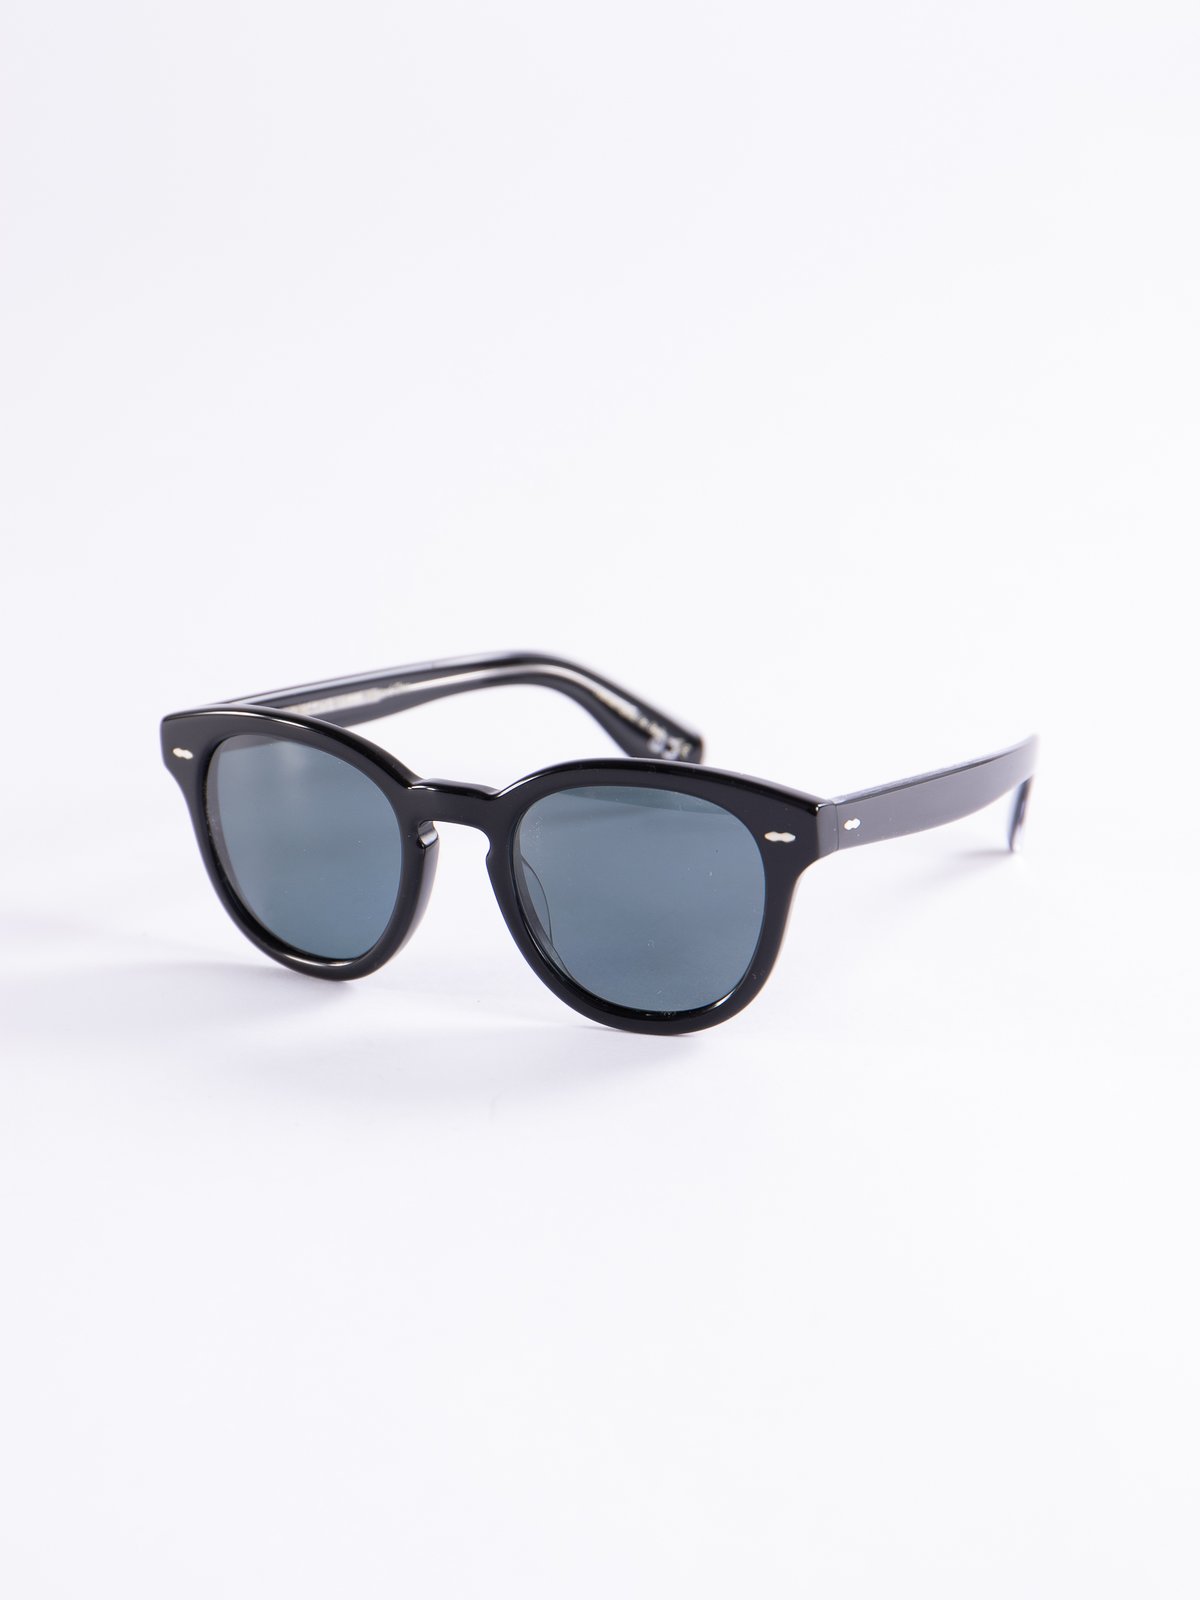 Black/Blue Polar Cary Grant Sunglasses - Image 3